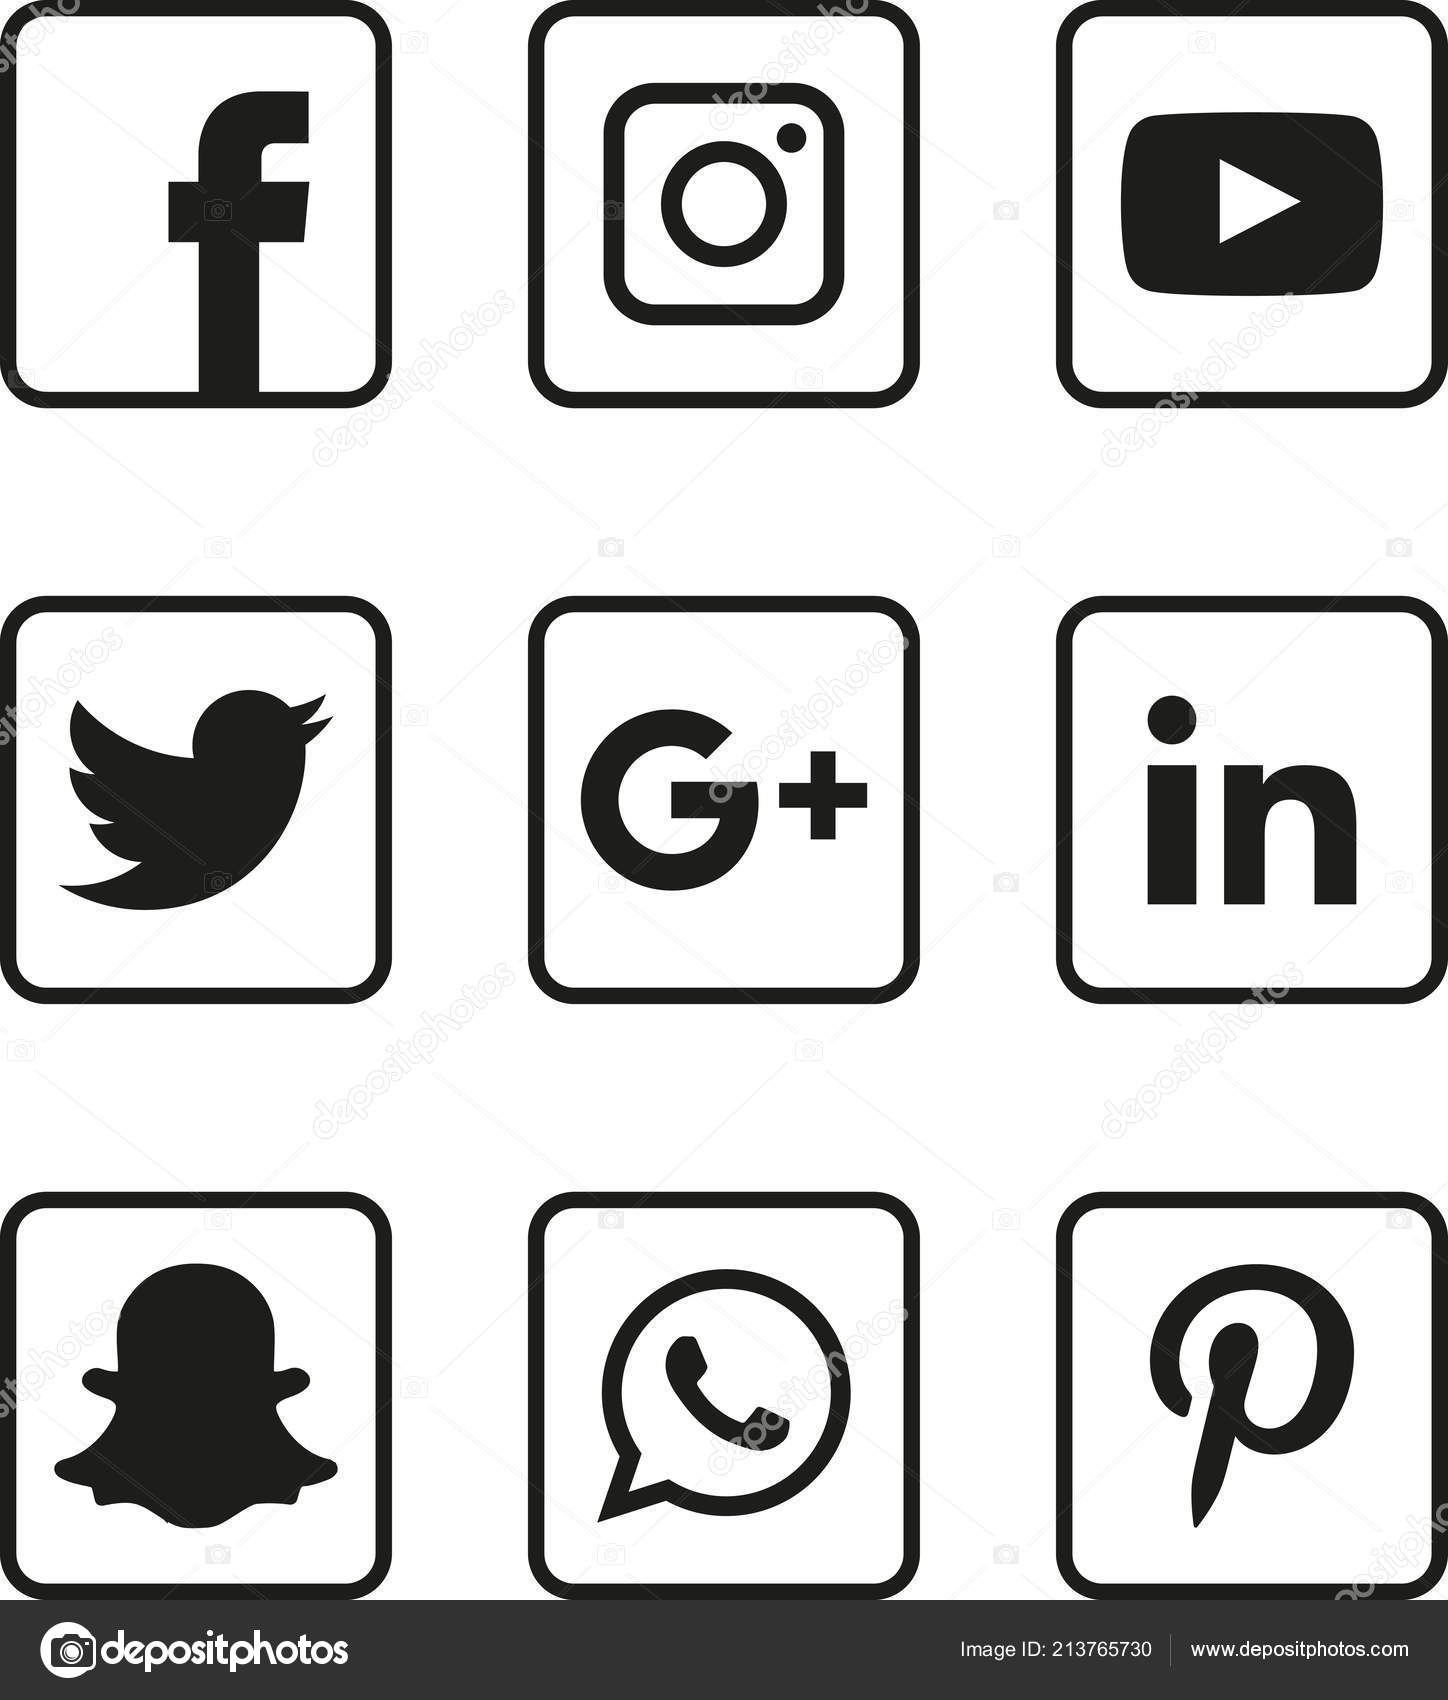 Facebook Logo In Black And White Black White Social Media Icons